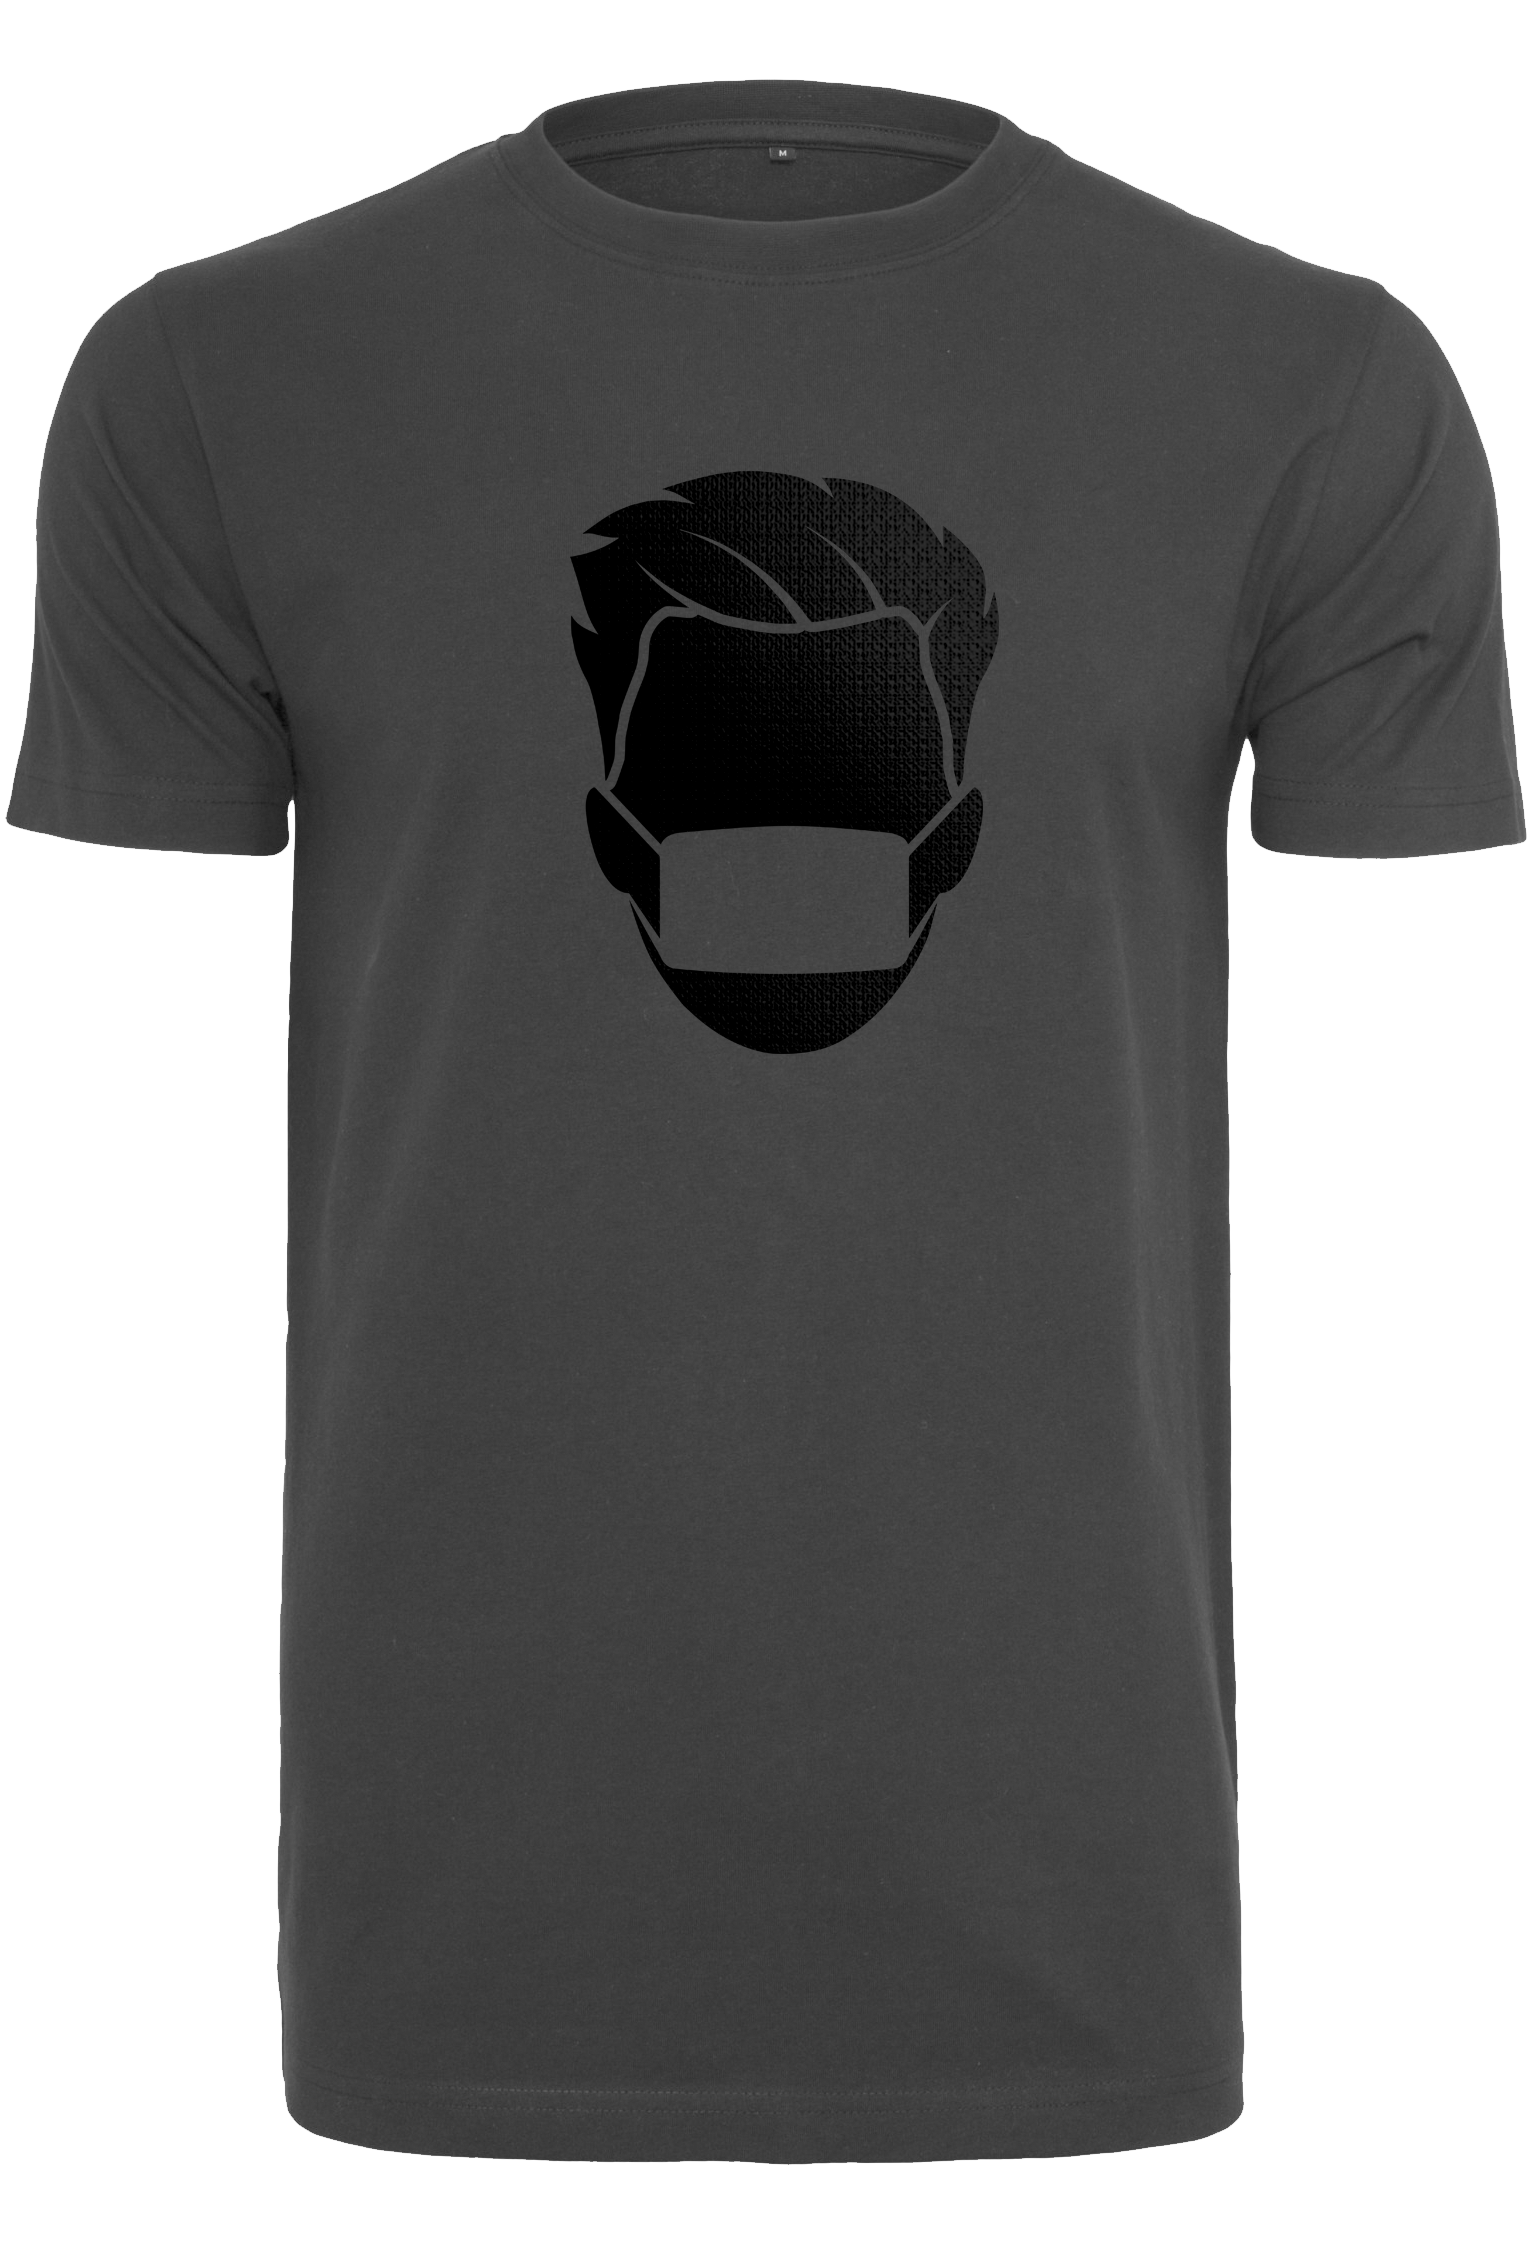 Guzman black T-Shirt